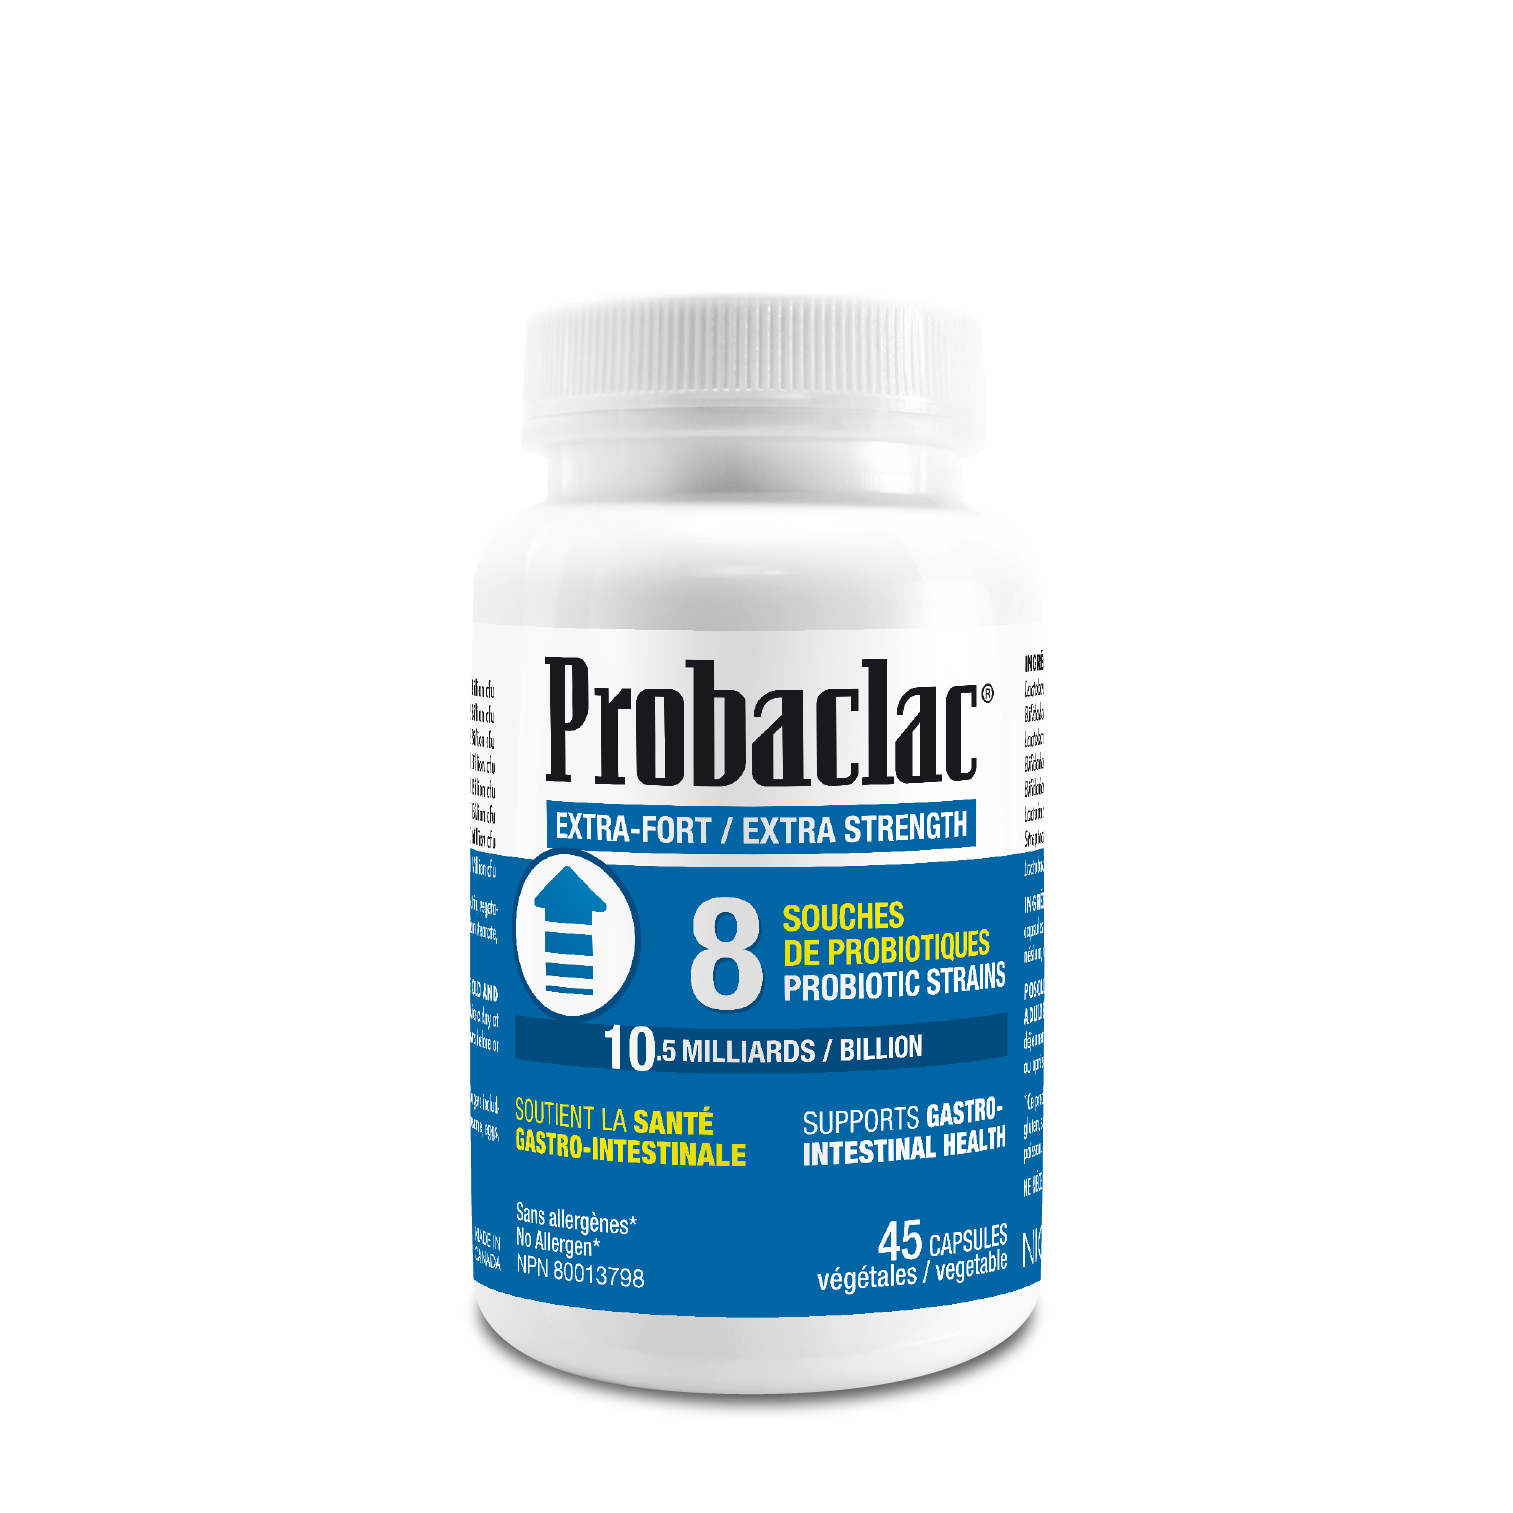 Extra Strength Probiotics Probaclac